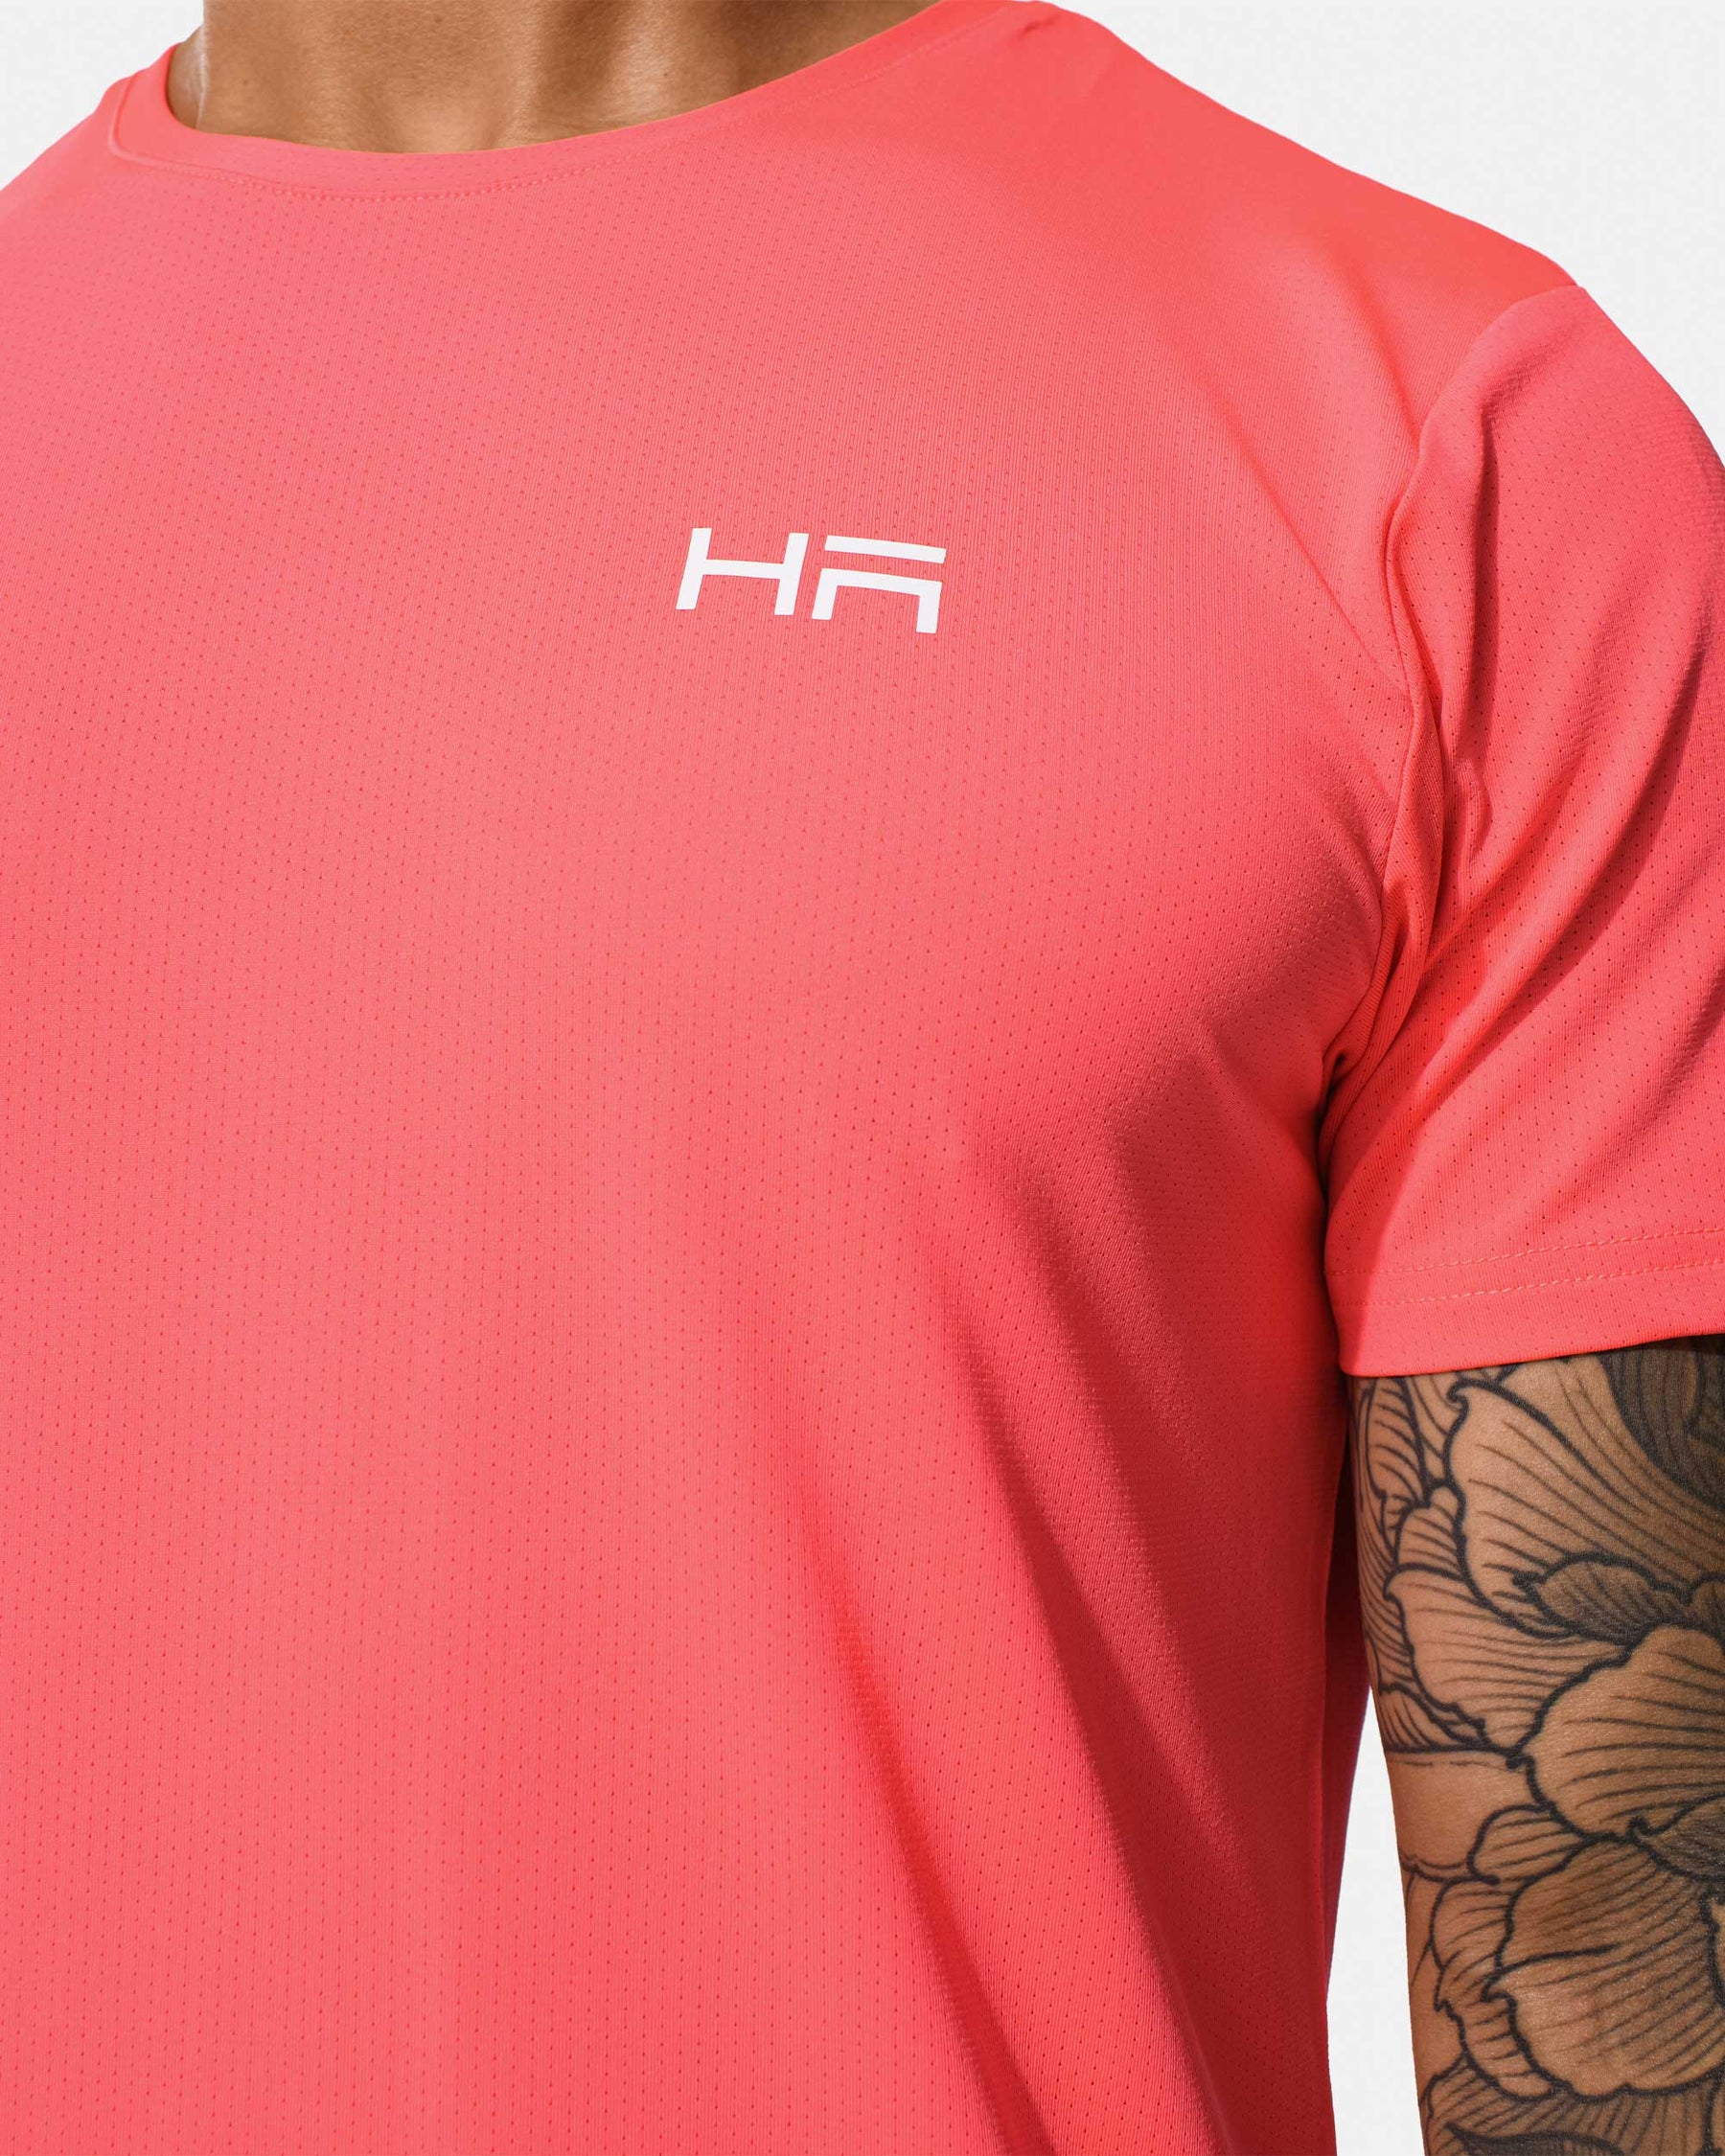 Sport Training T-Shirt - Neon Coral